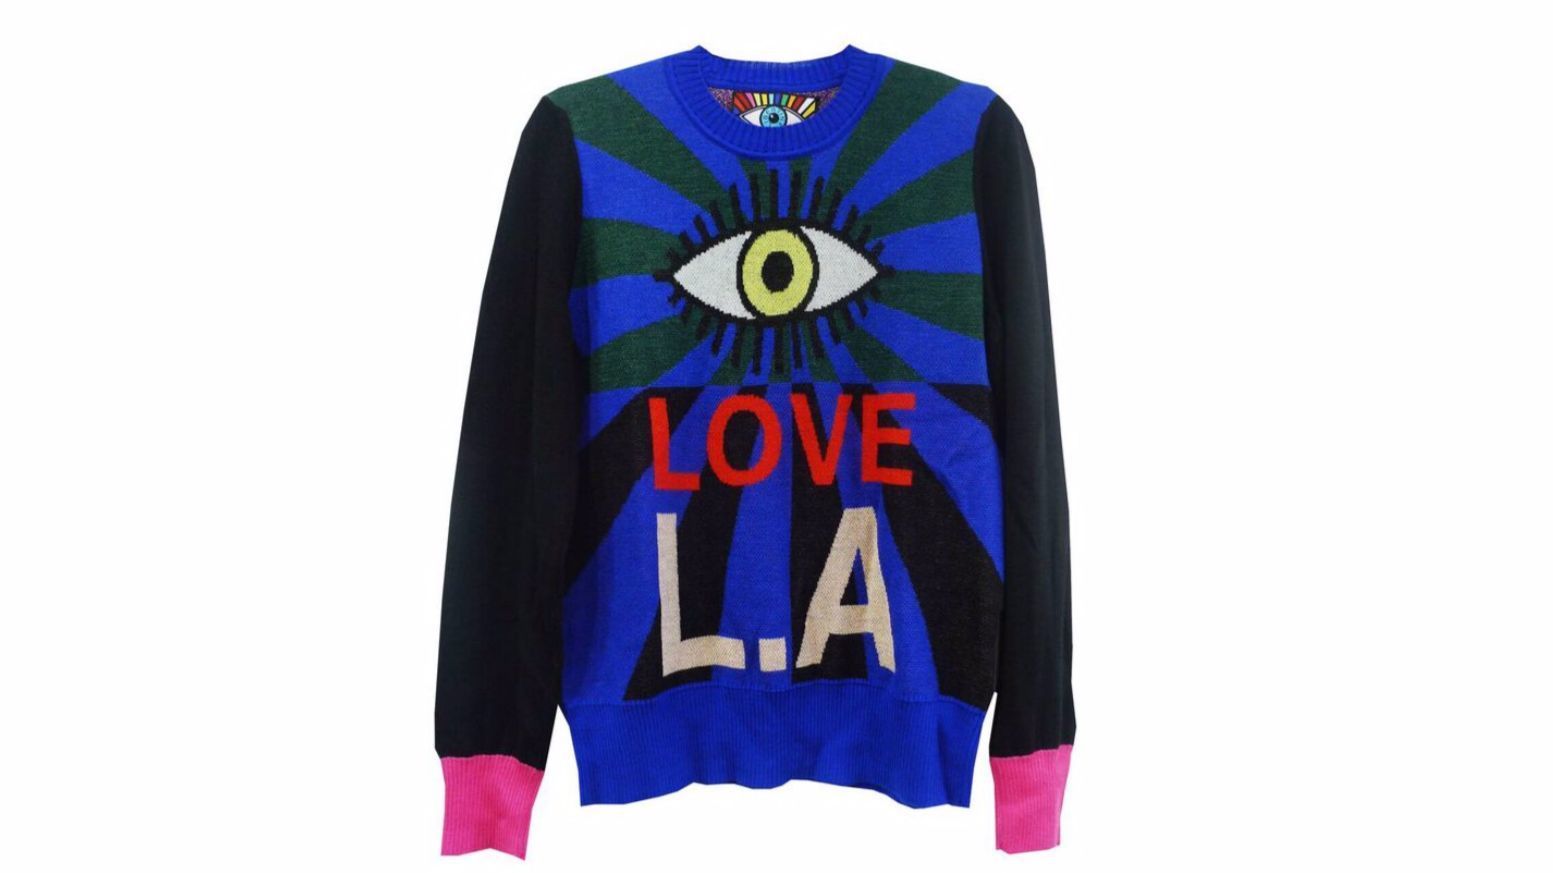 Libertine’s spirited Eye Love L.A. cashmere sweater.